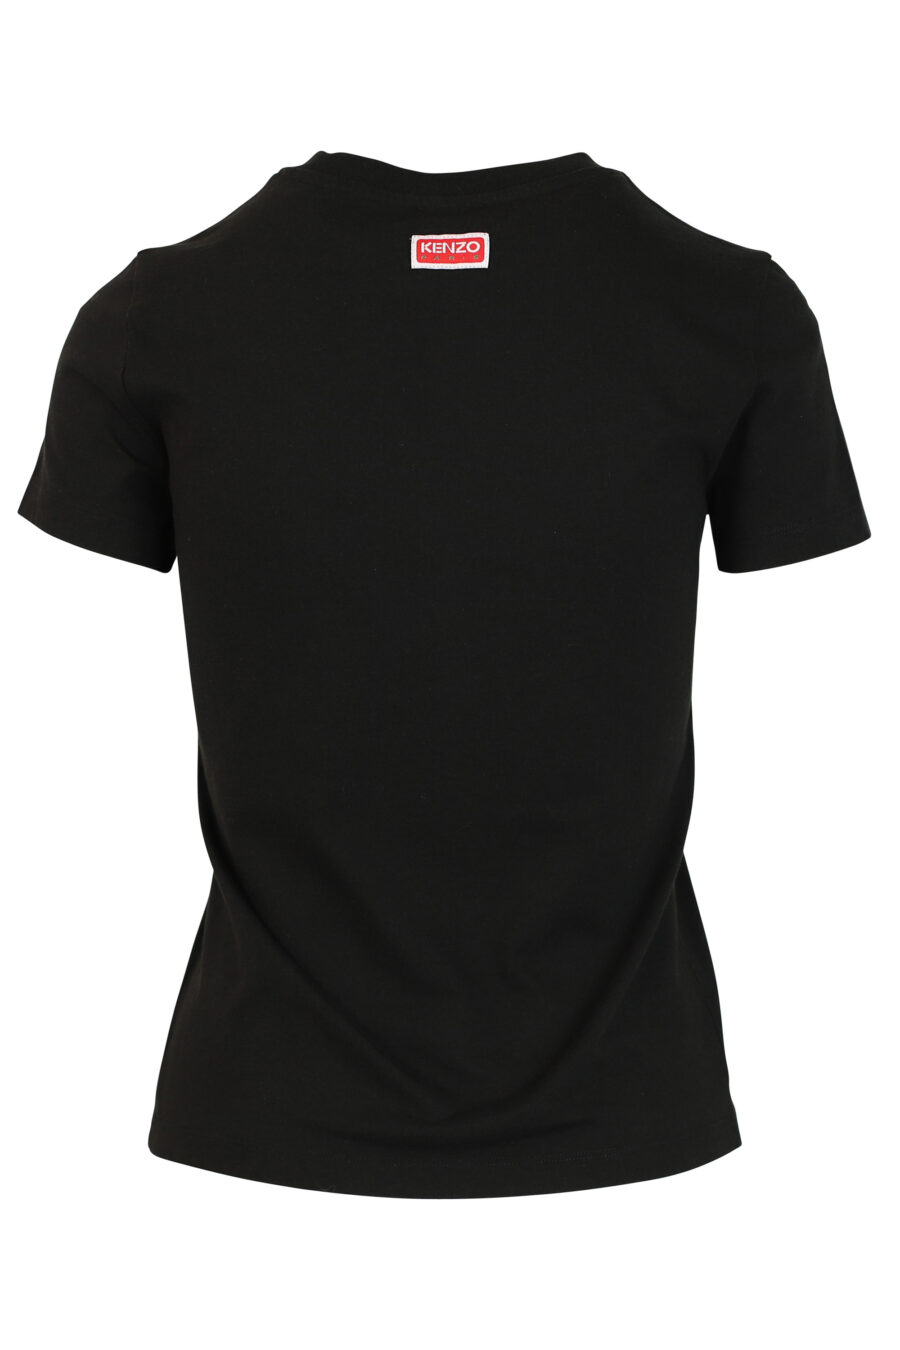 Schwarzes T-Shirt mit Tiger-Maxilogo - 3612230460195 2